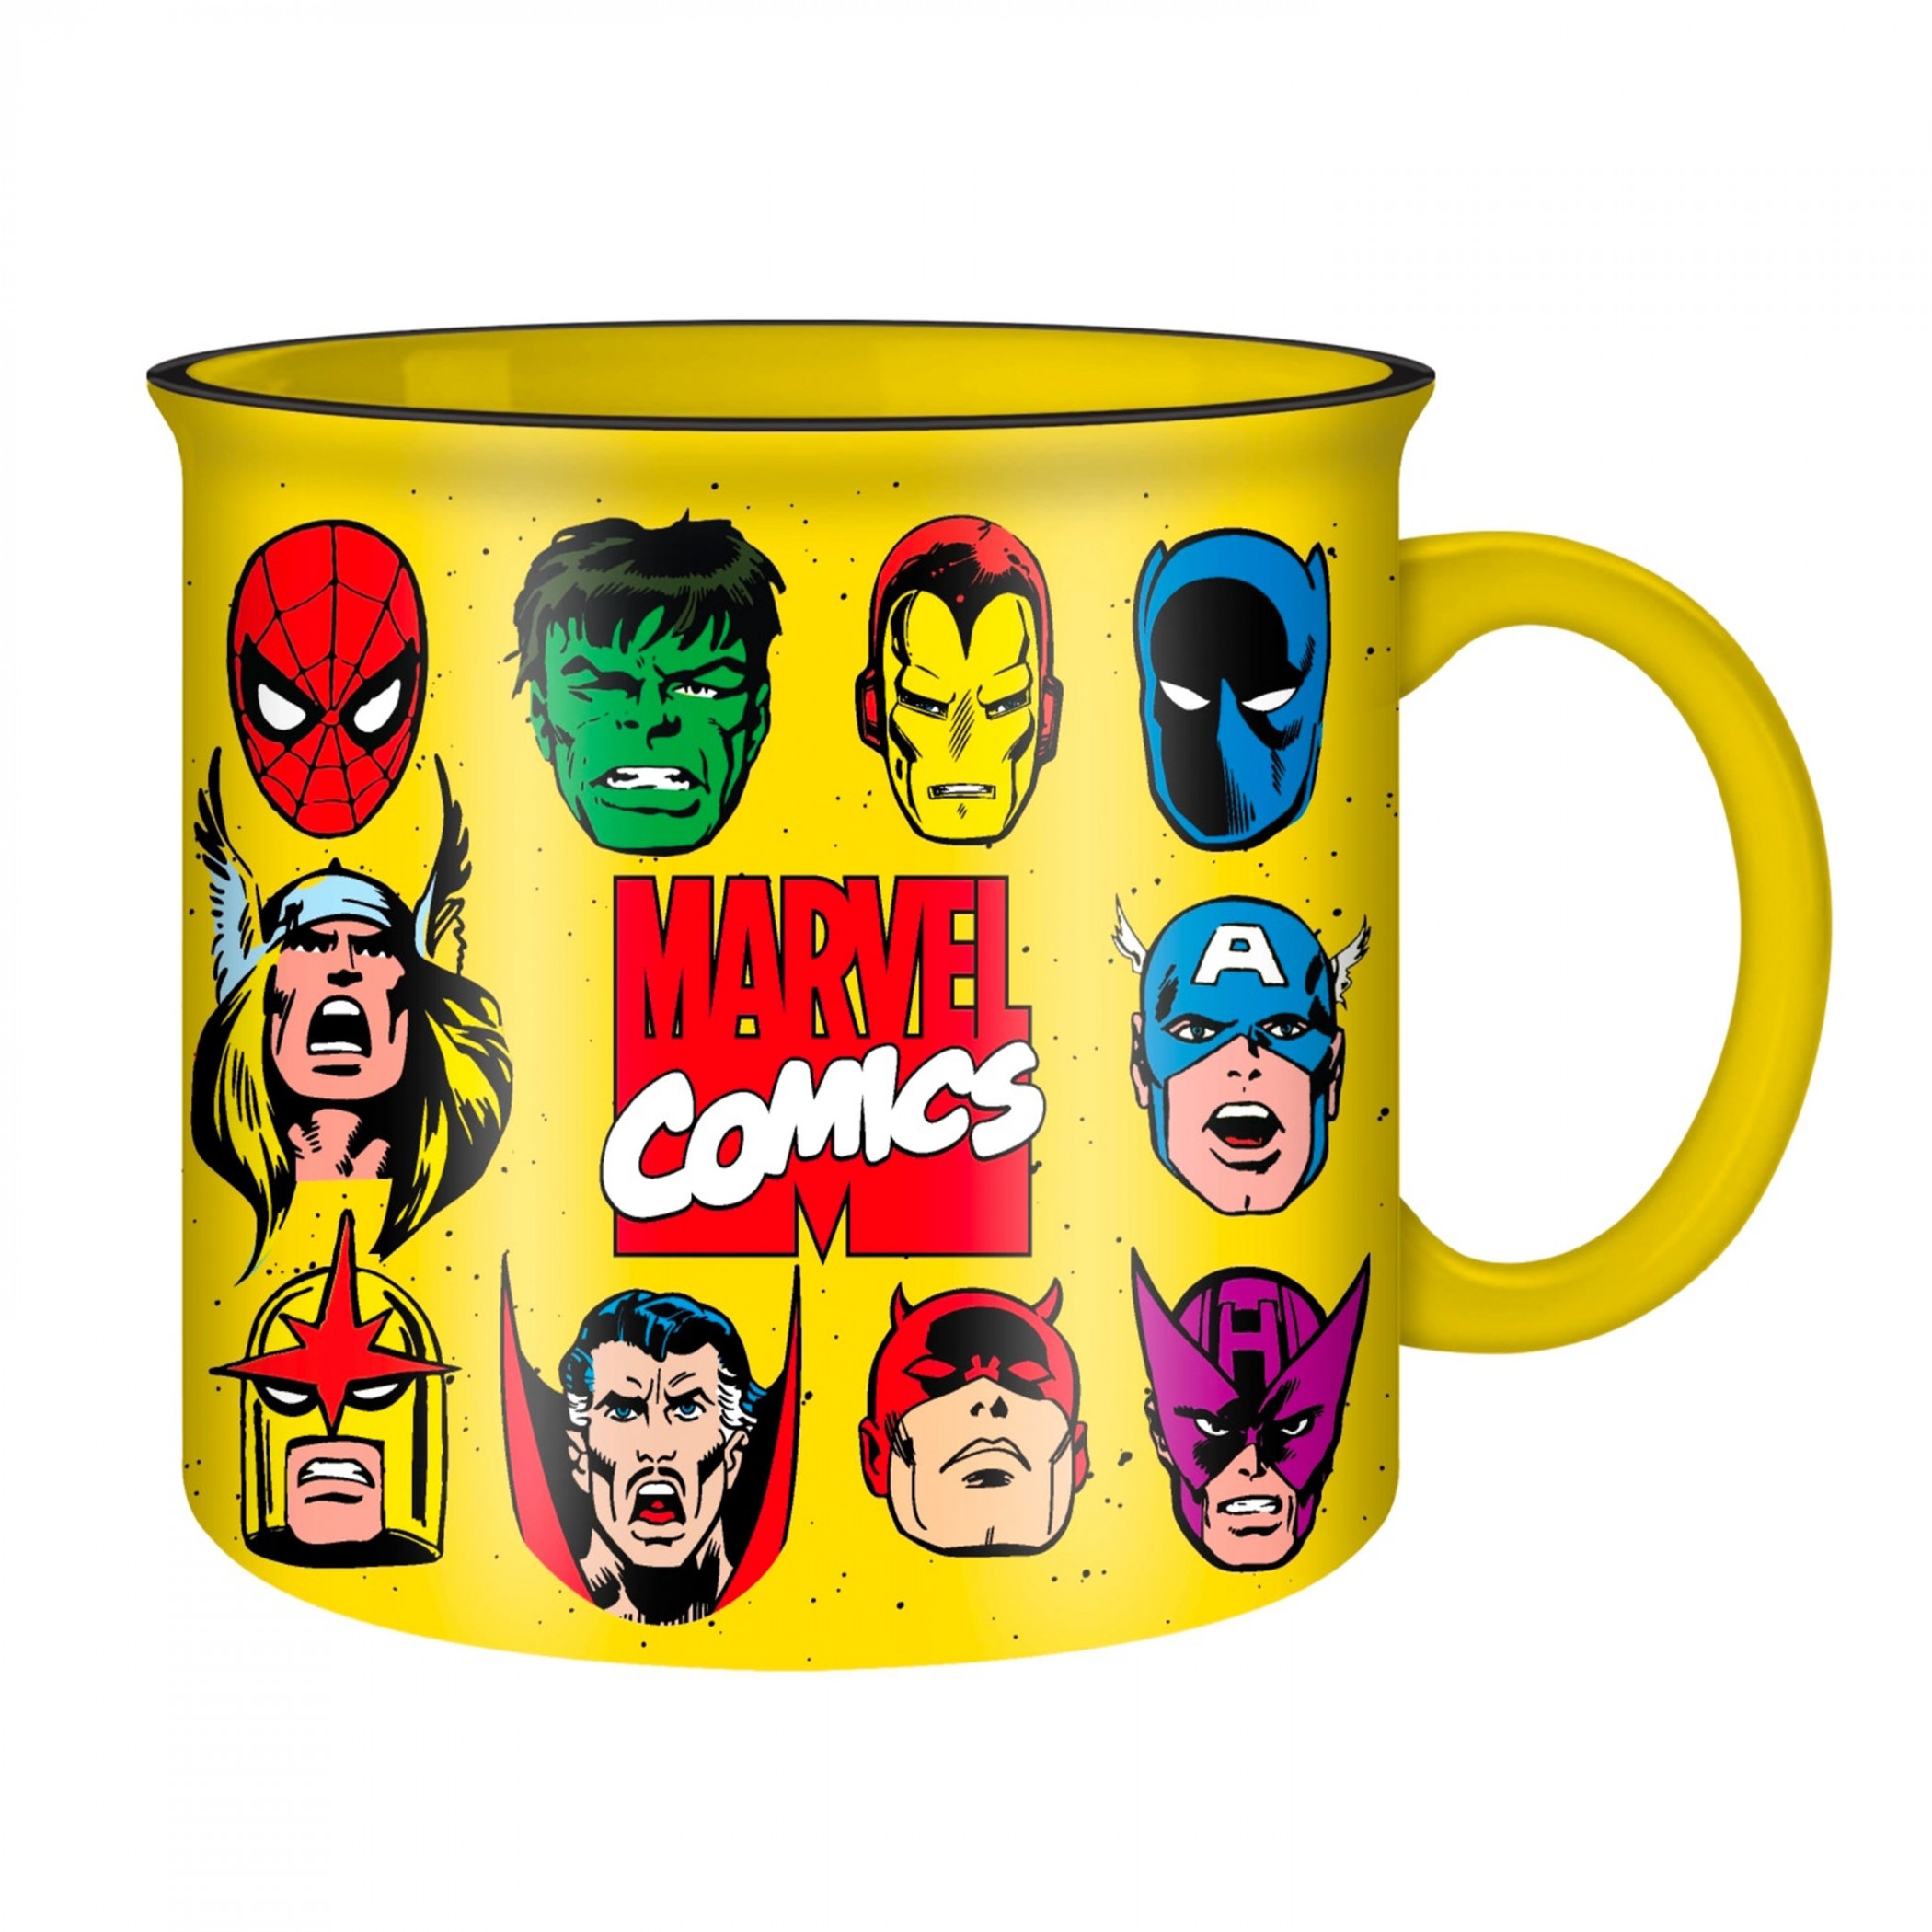 Marvel Comics Heroes and Villains 20oz Ceramic Camper Mug